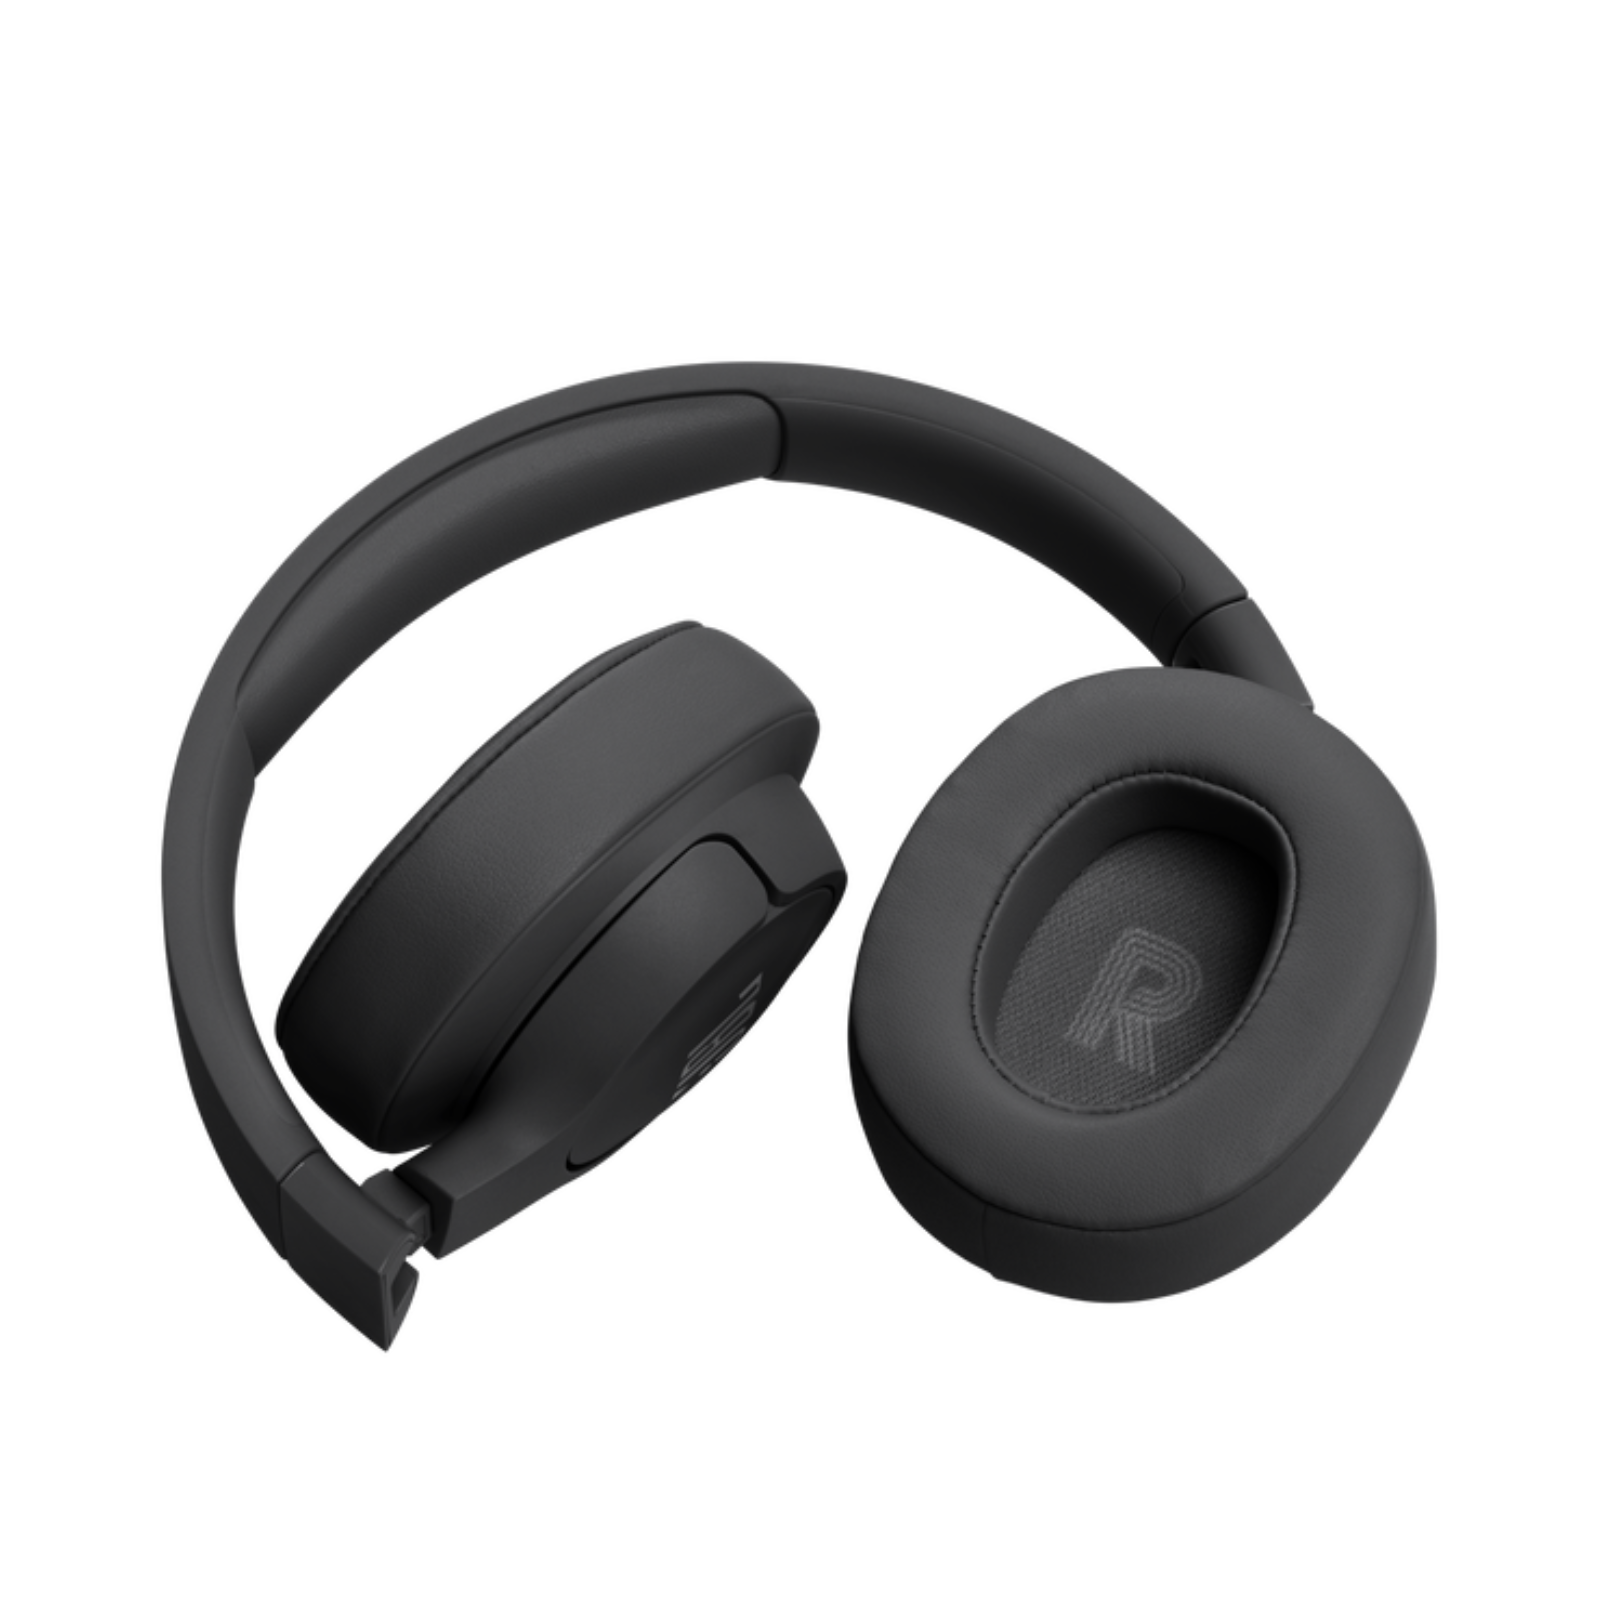 JBL Tune 720BT Wireless Over-Ear ANC Headphones User Guide